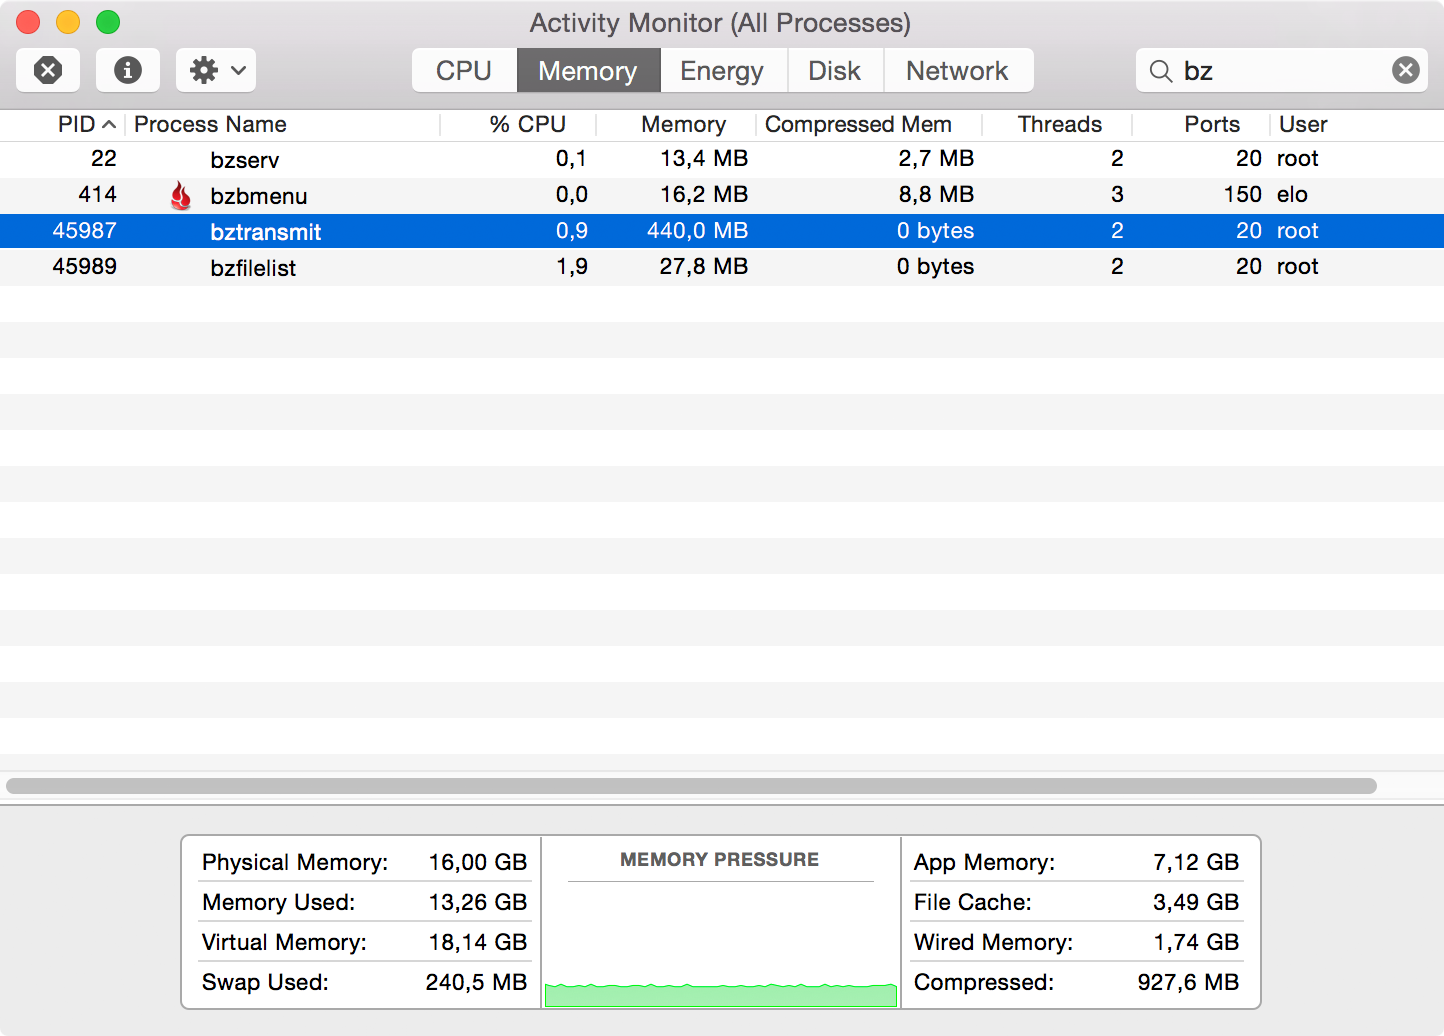 Activity Monitor screenshot showing the memory consumption of Backblaze processes